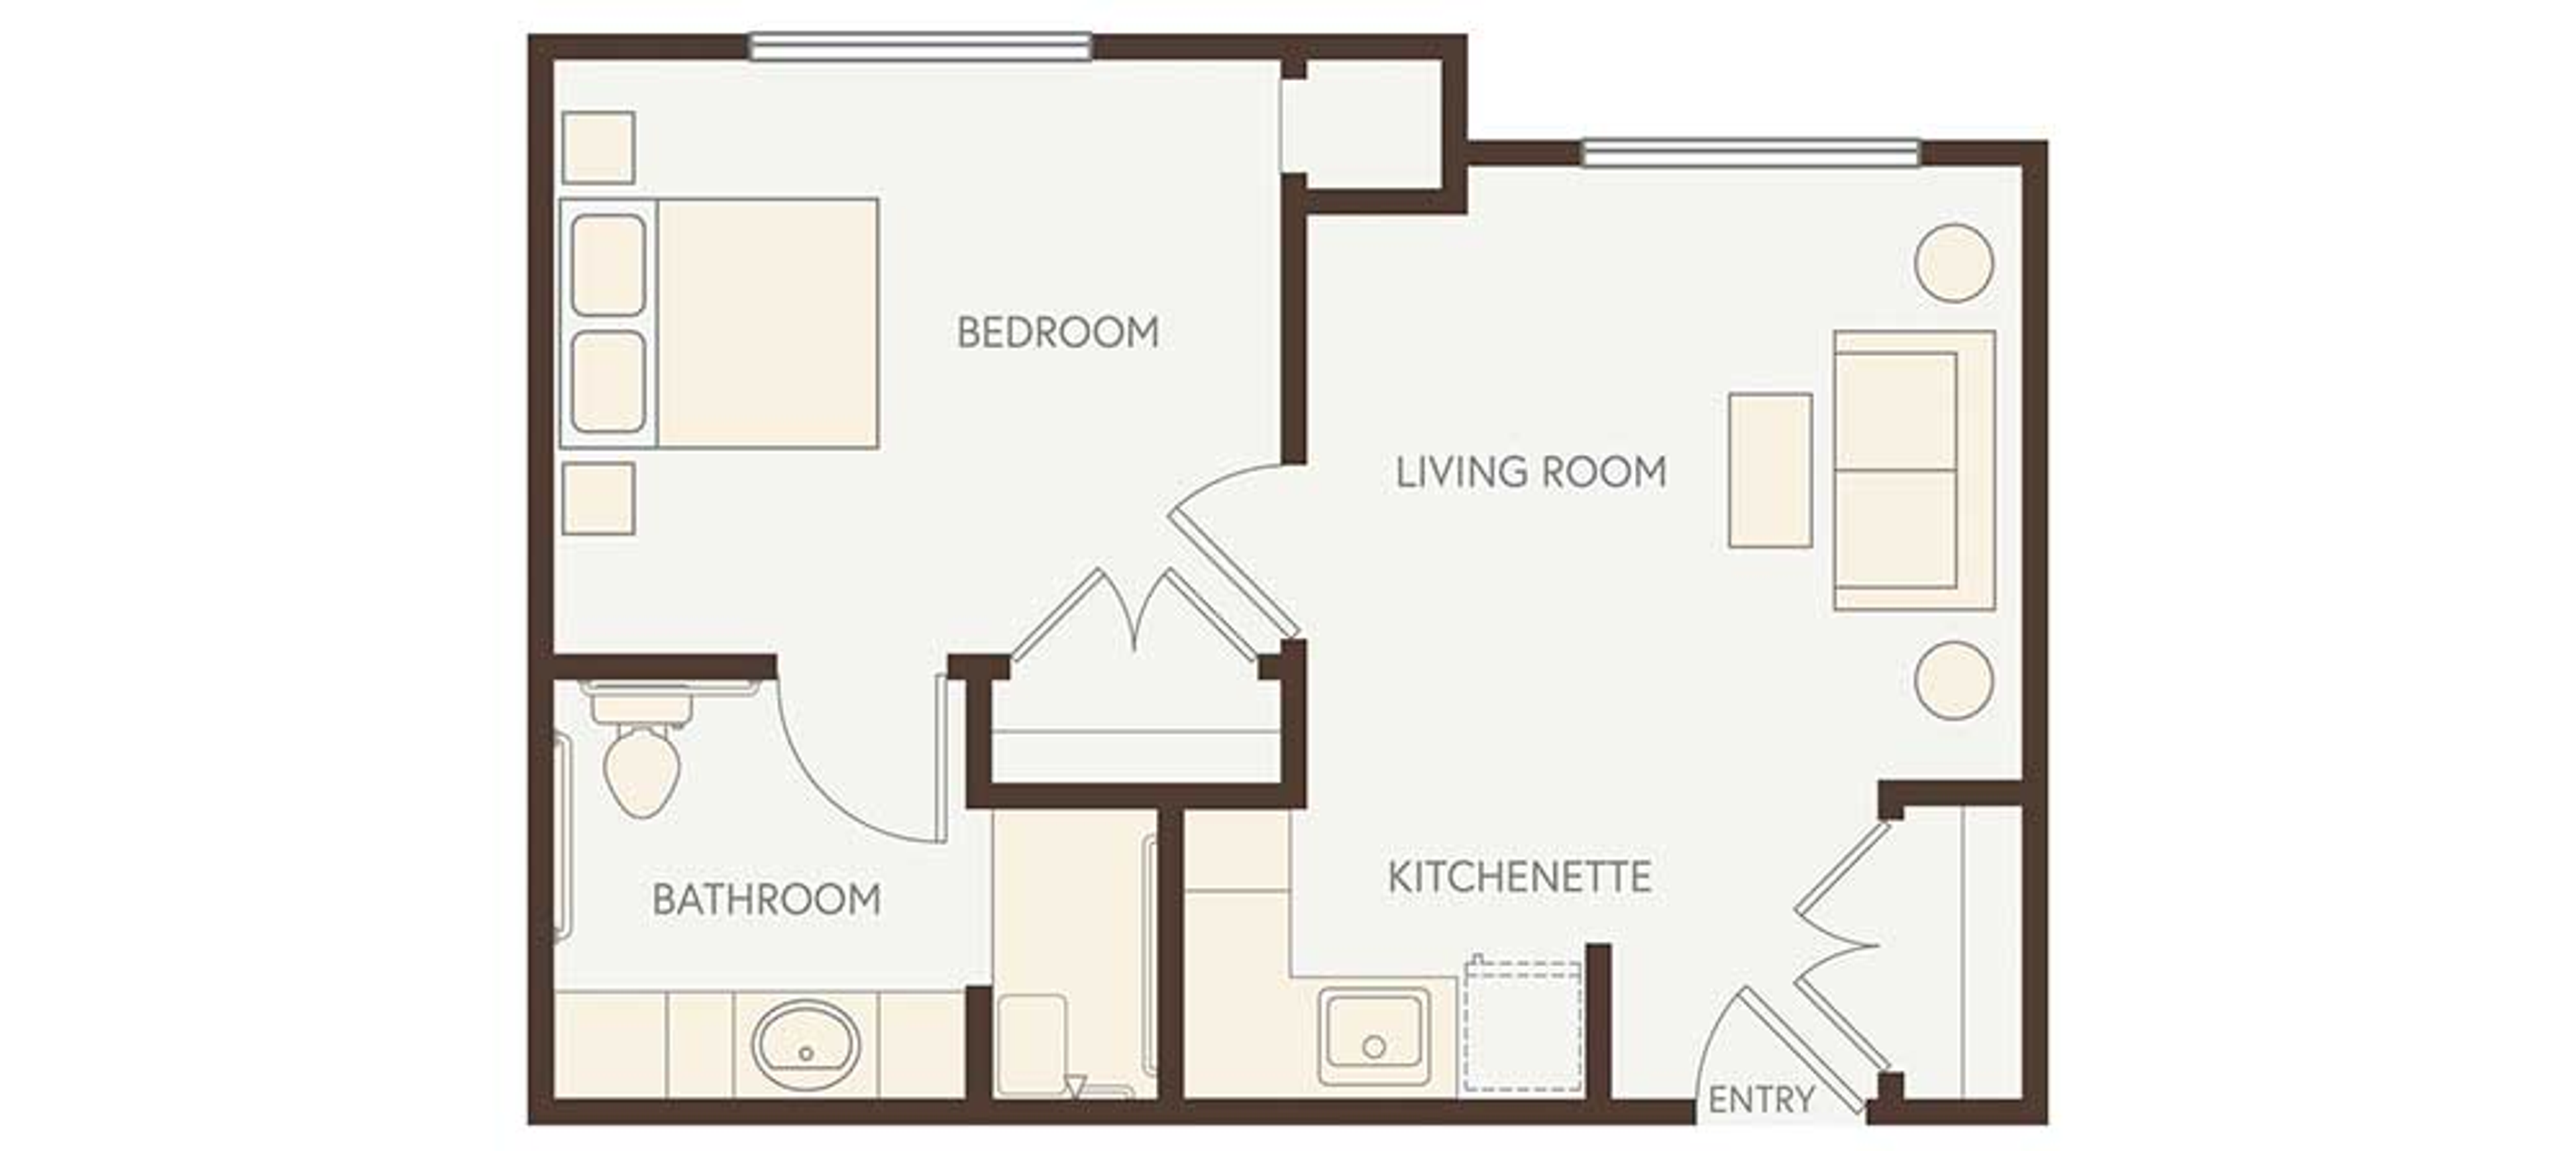 Floorplan - Heartis San Antonio - 1 bed, 1 bath, 462 sq. ft. Assisted Living